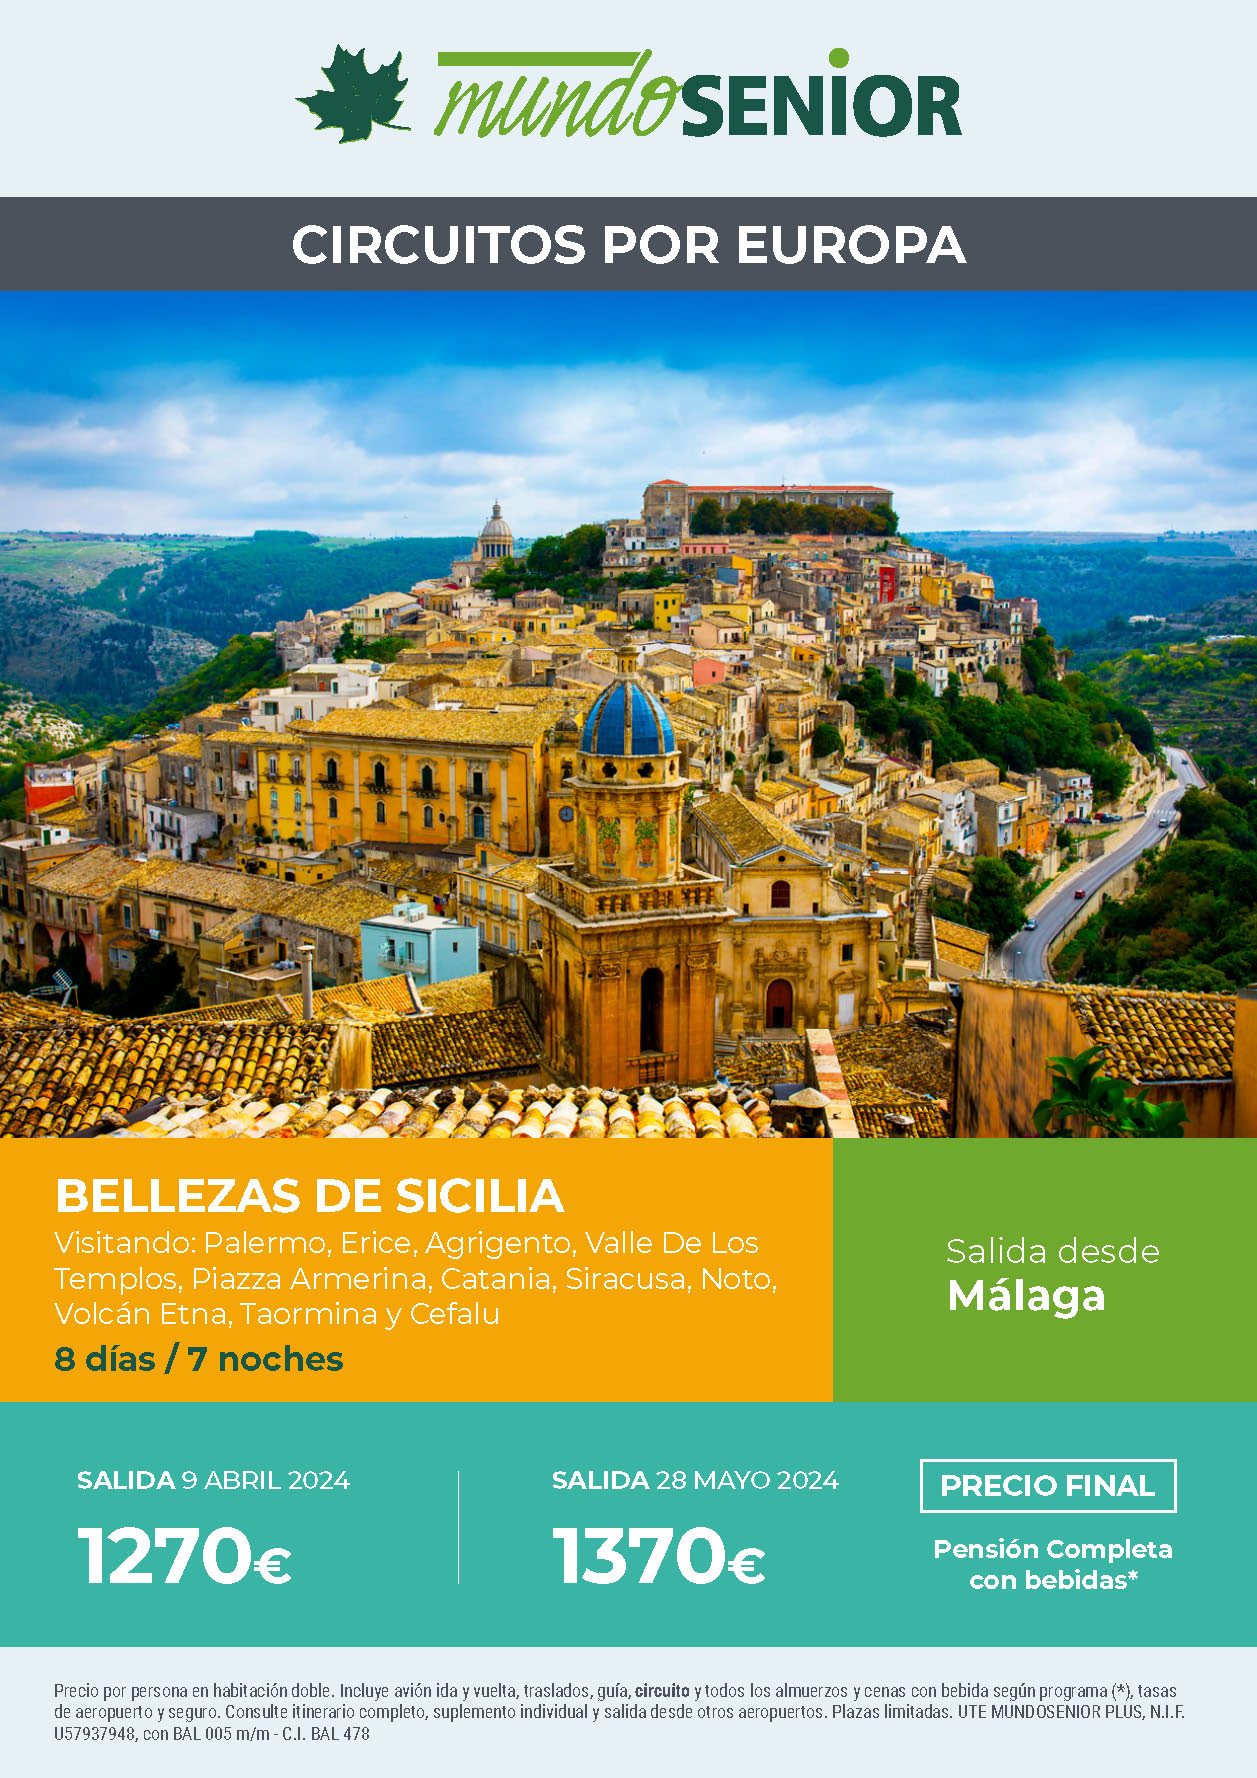 Oferta Mundo Senior circuito Bellezas de Sicilia Pension Completa 8 dias salidas abril mayo 2024 en vuelo directo desde Malaga